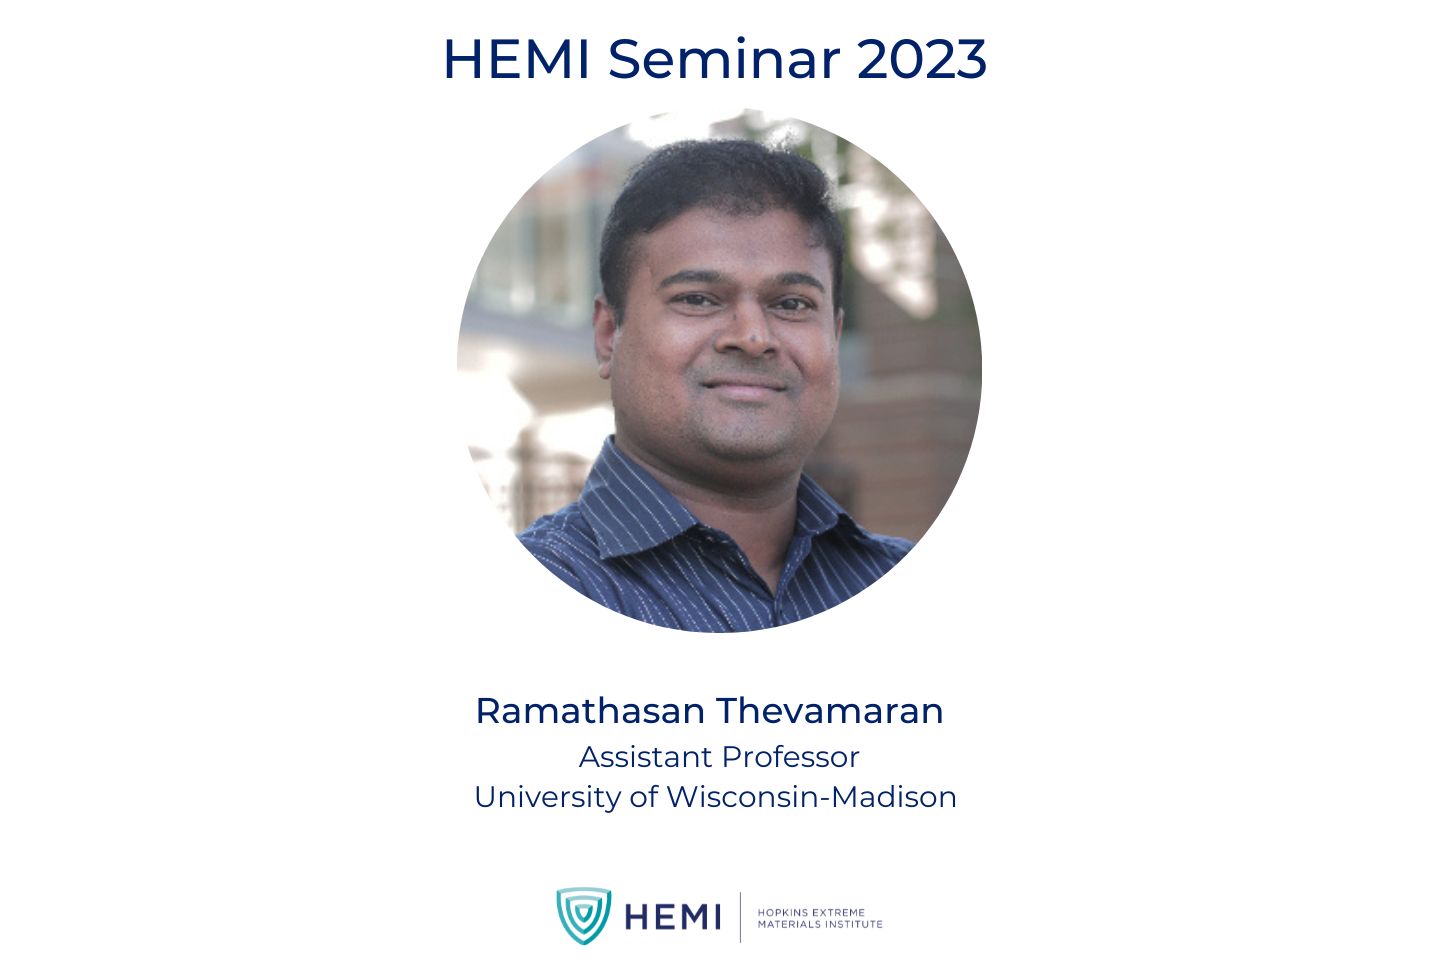 Ramathasan Thevamaran headshot and HEMI logo with text: "HEMI Seminar 2023, Ramathasan Thevamaran, Assistant Professor, University of Wisconsin-Madison"